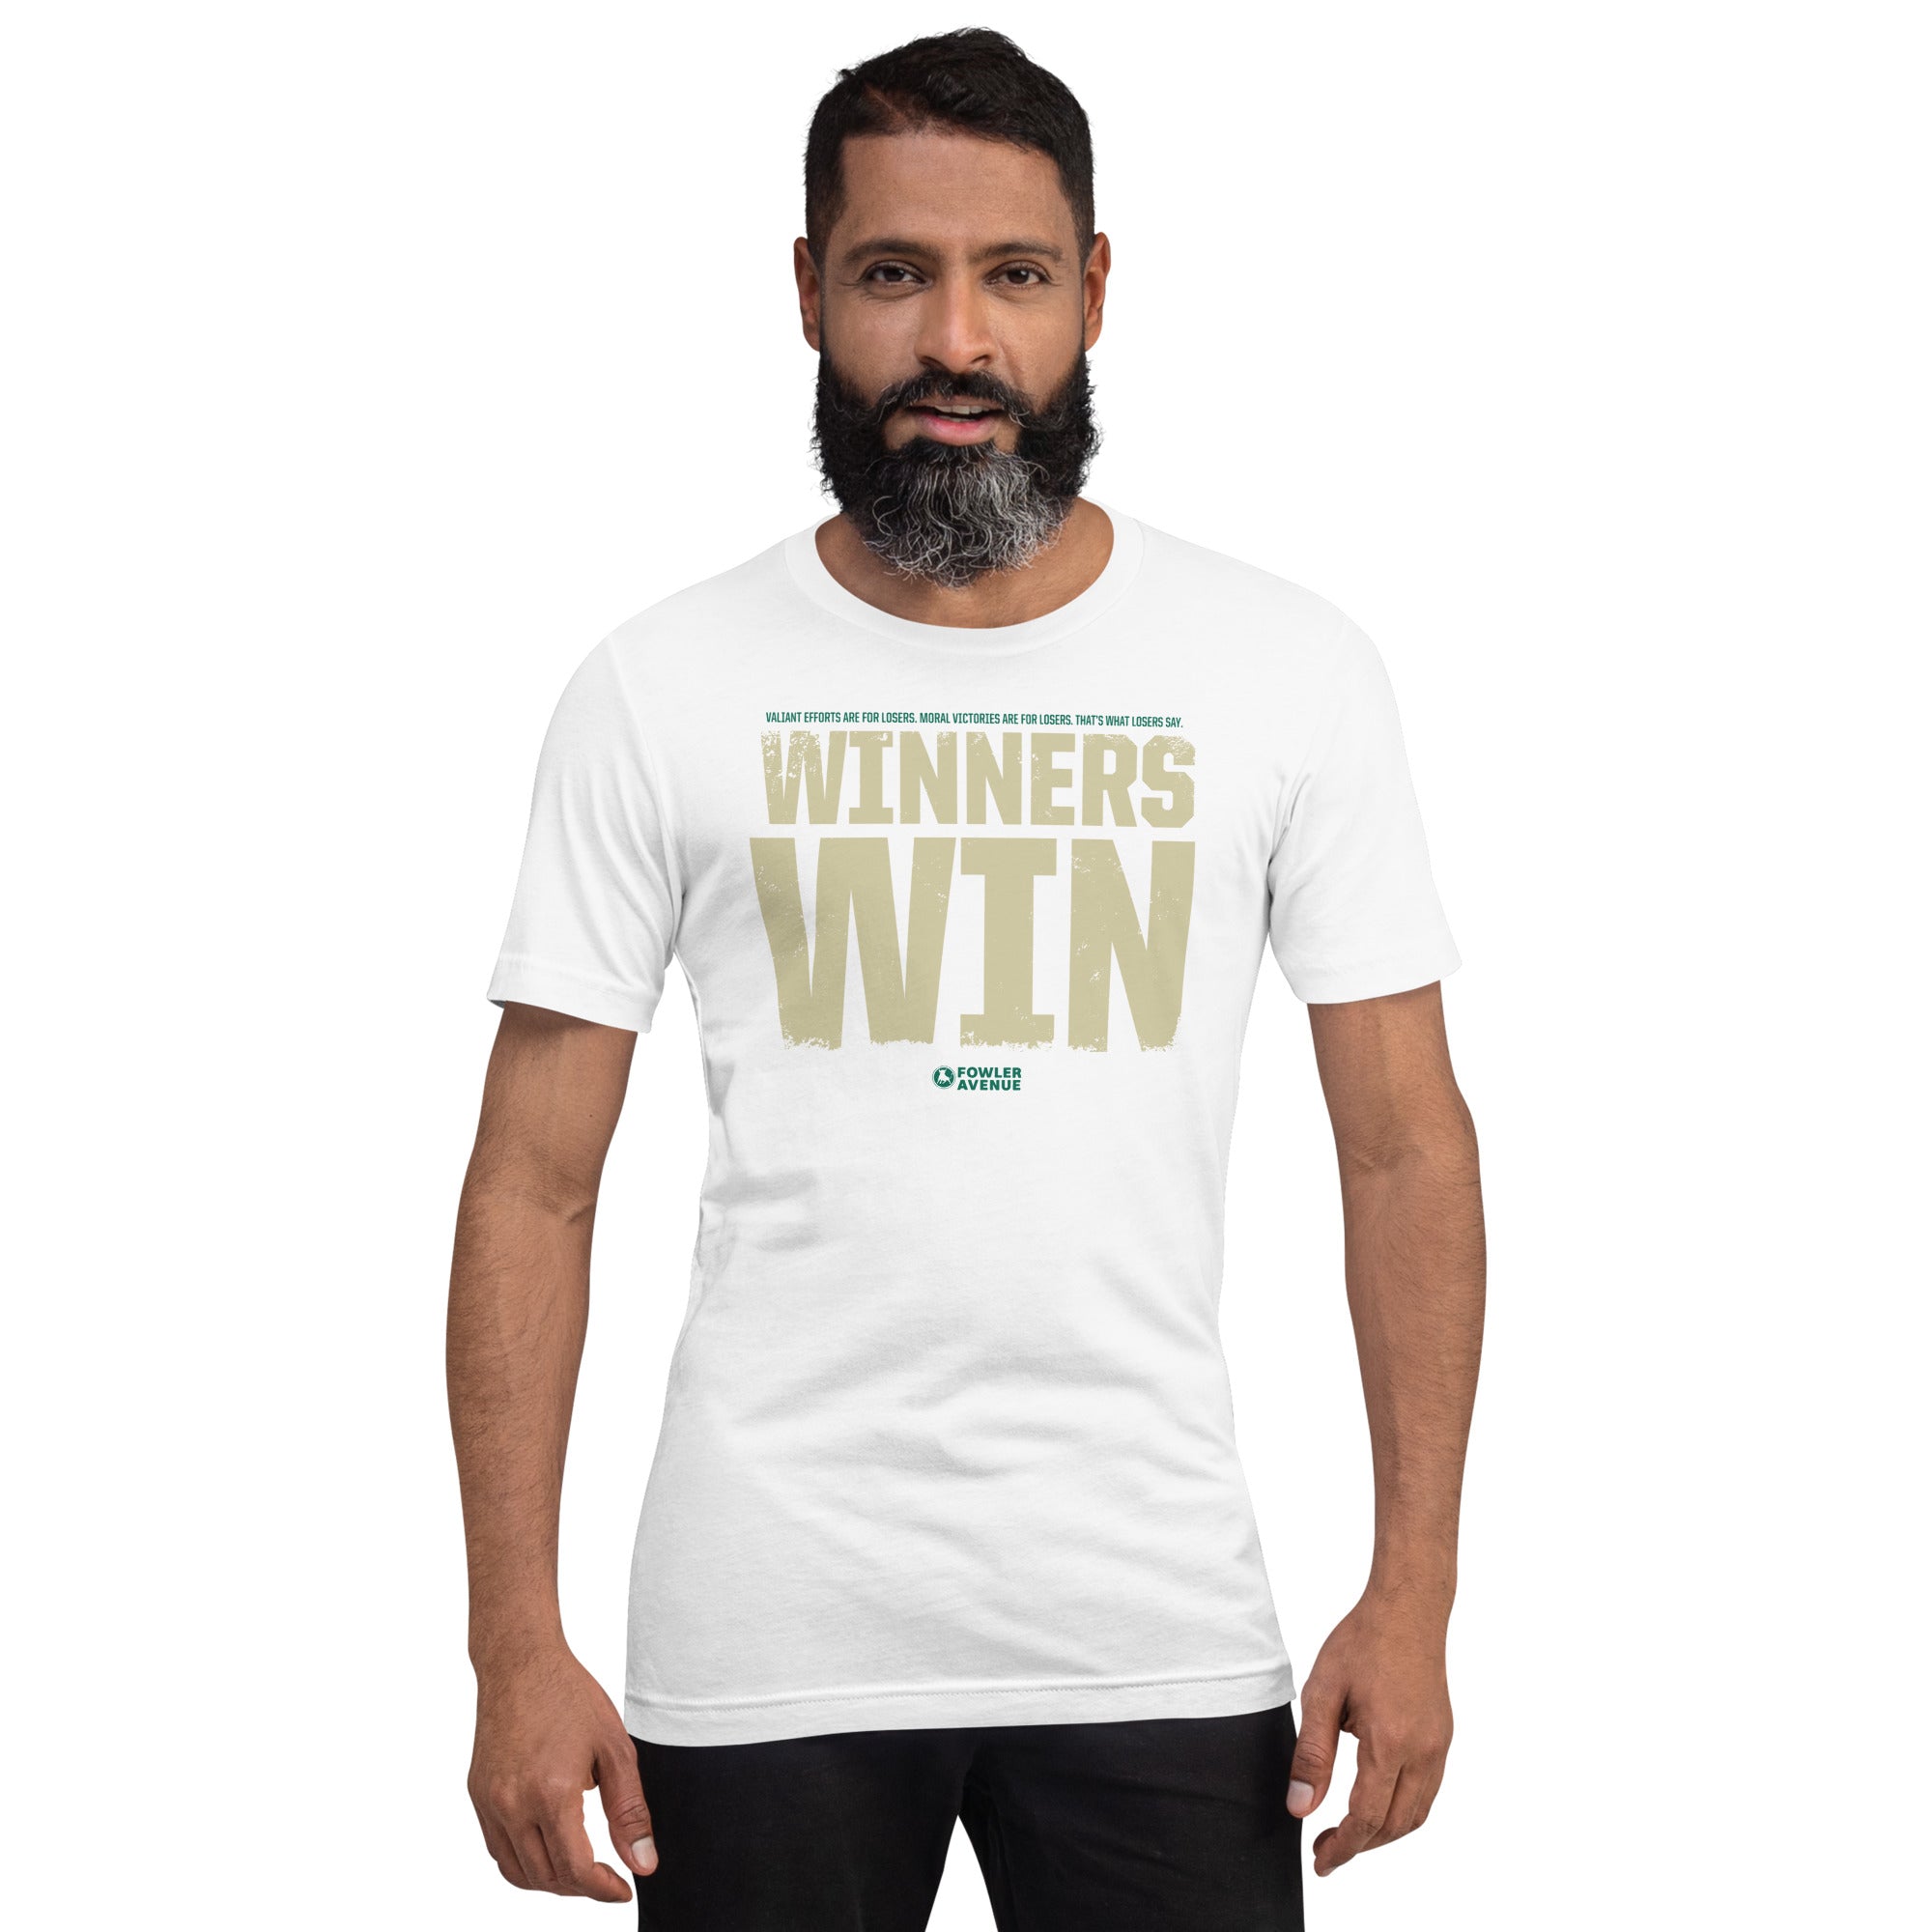 Winners Win - Unisex t-shirt